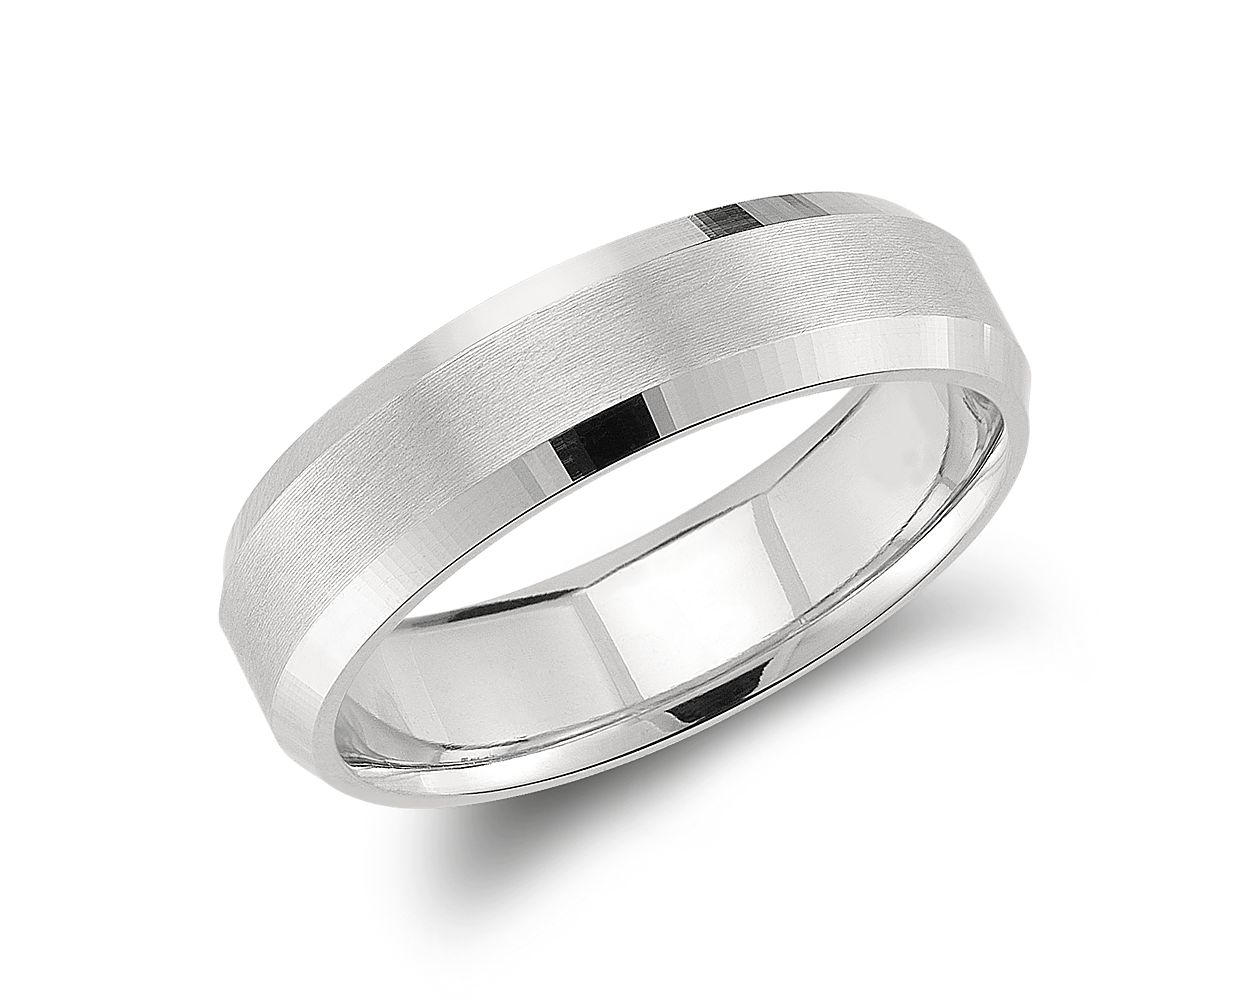 Our 10 Best Men's Wedding Rings | Blue Nile